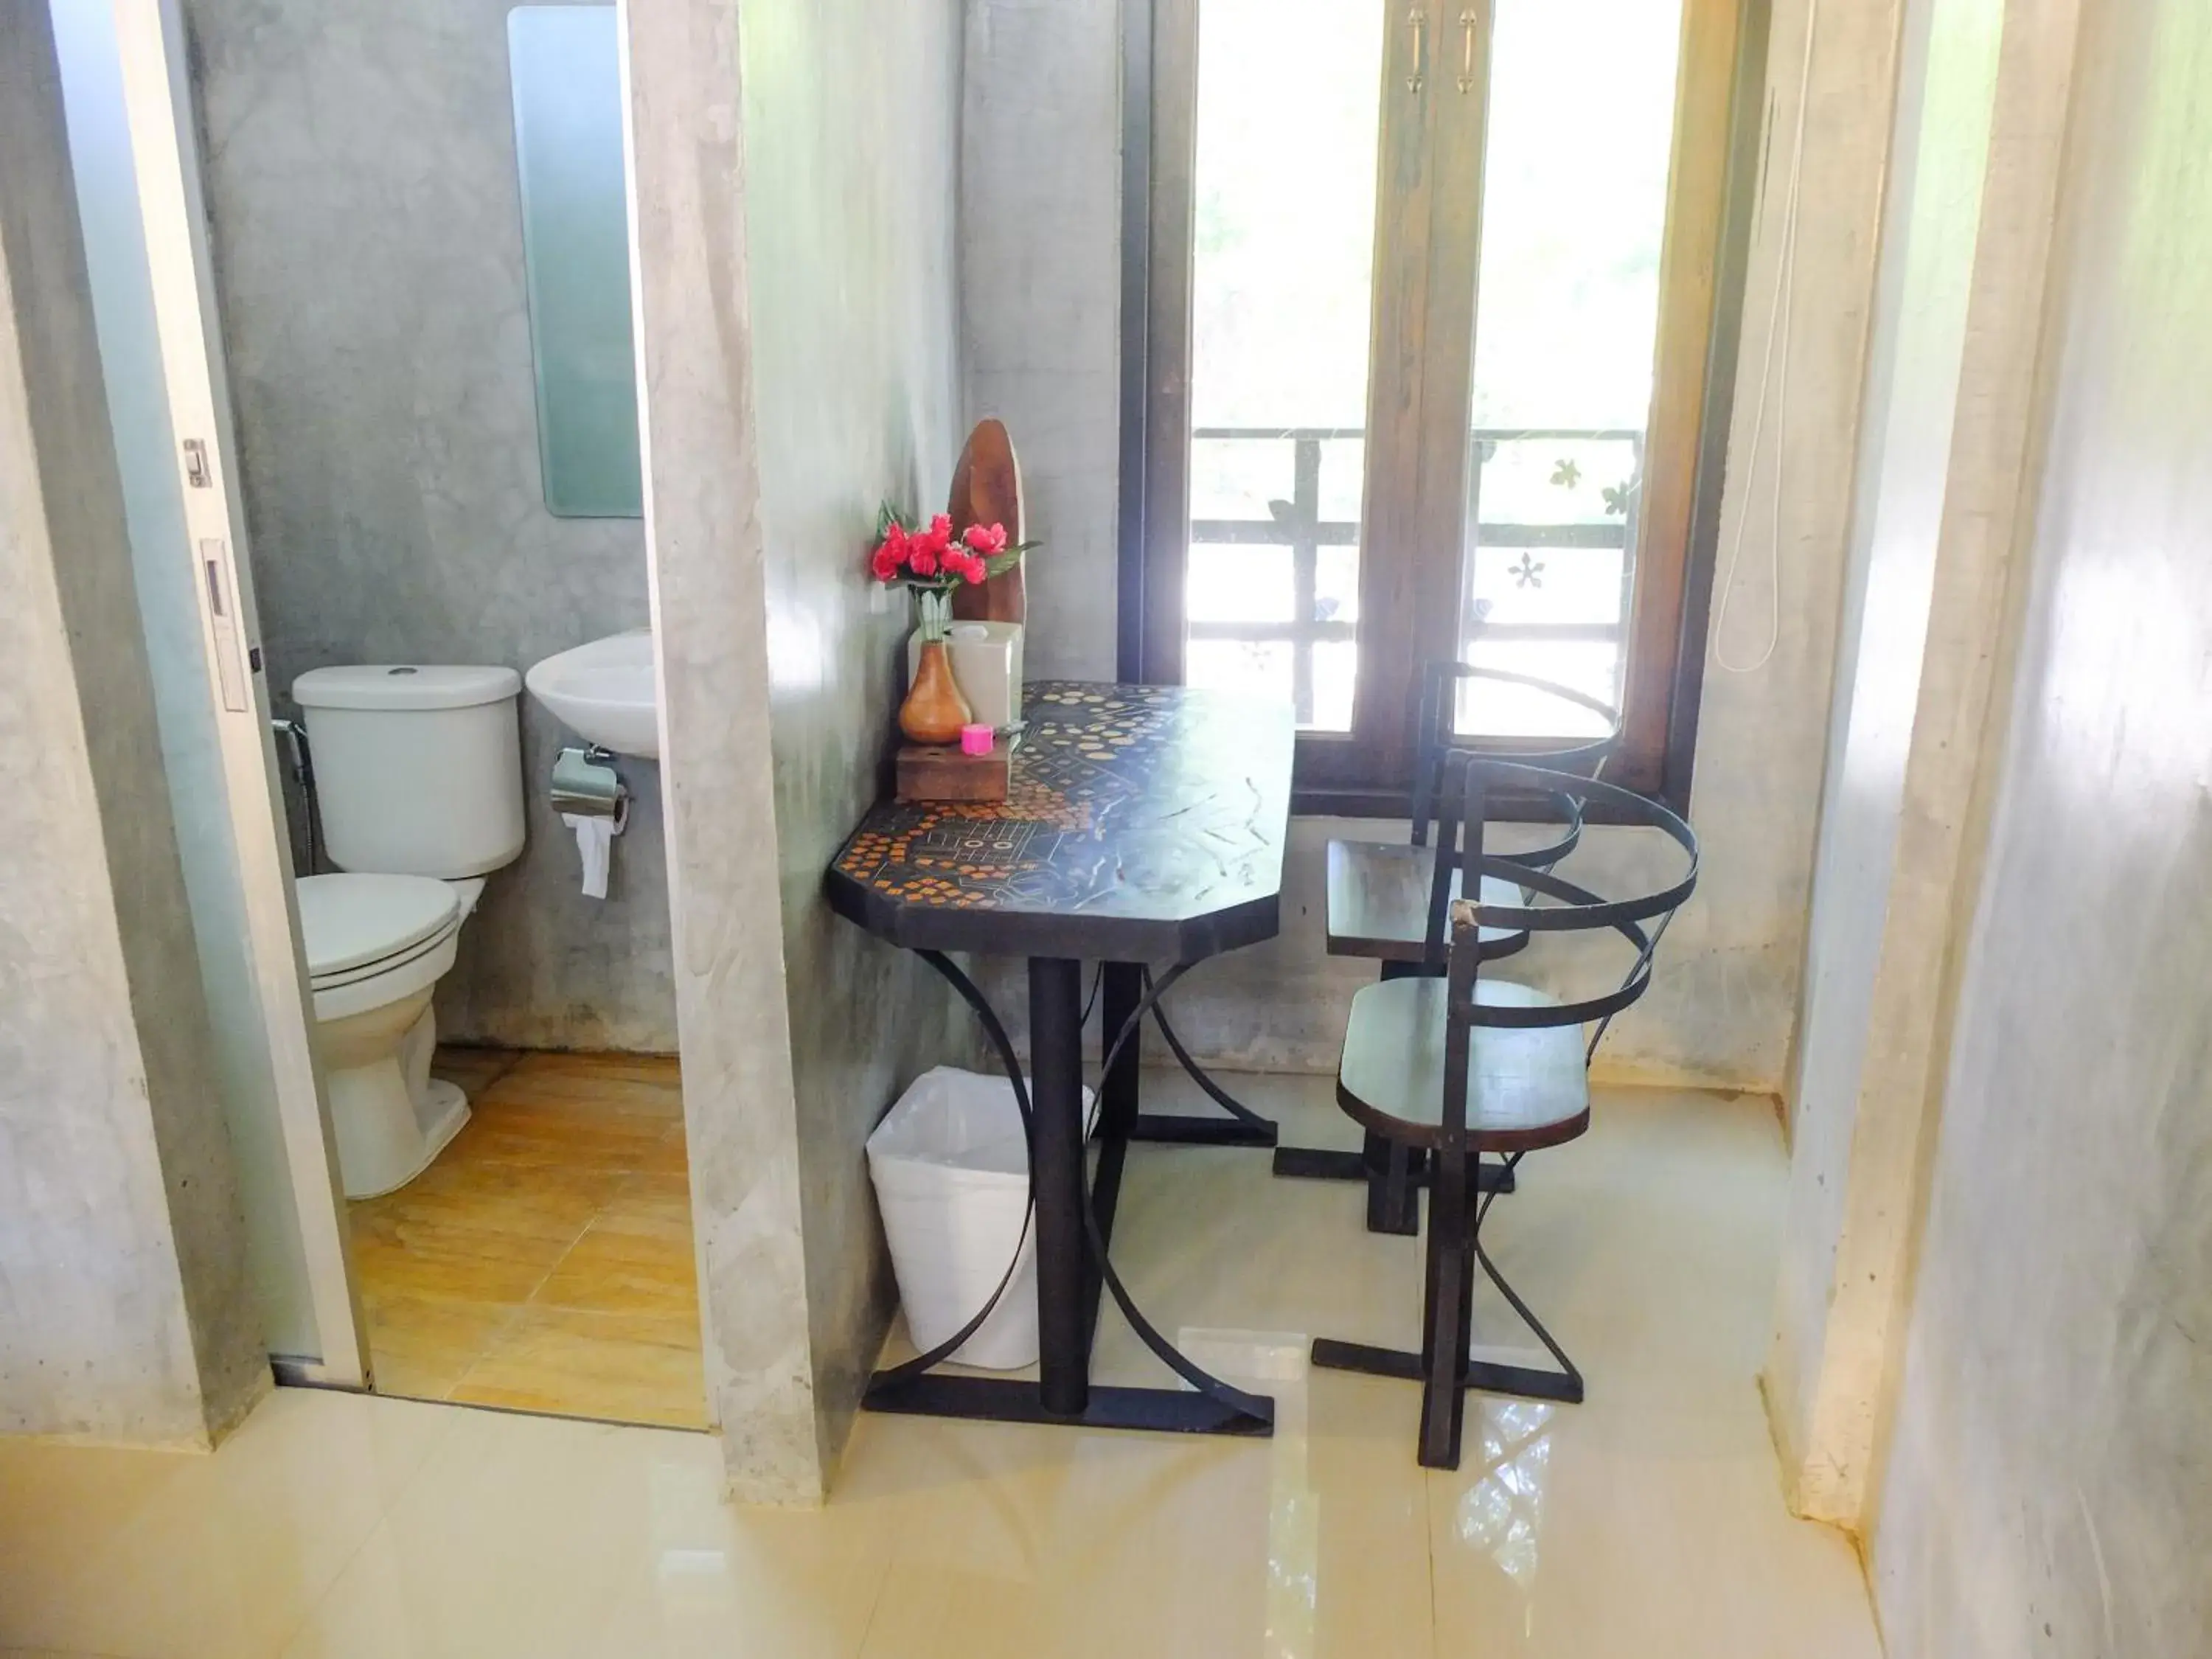 Area and facilities, Bathroom in Hern Lhin Natural Resort